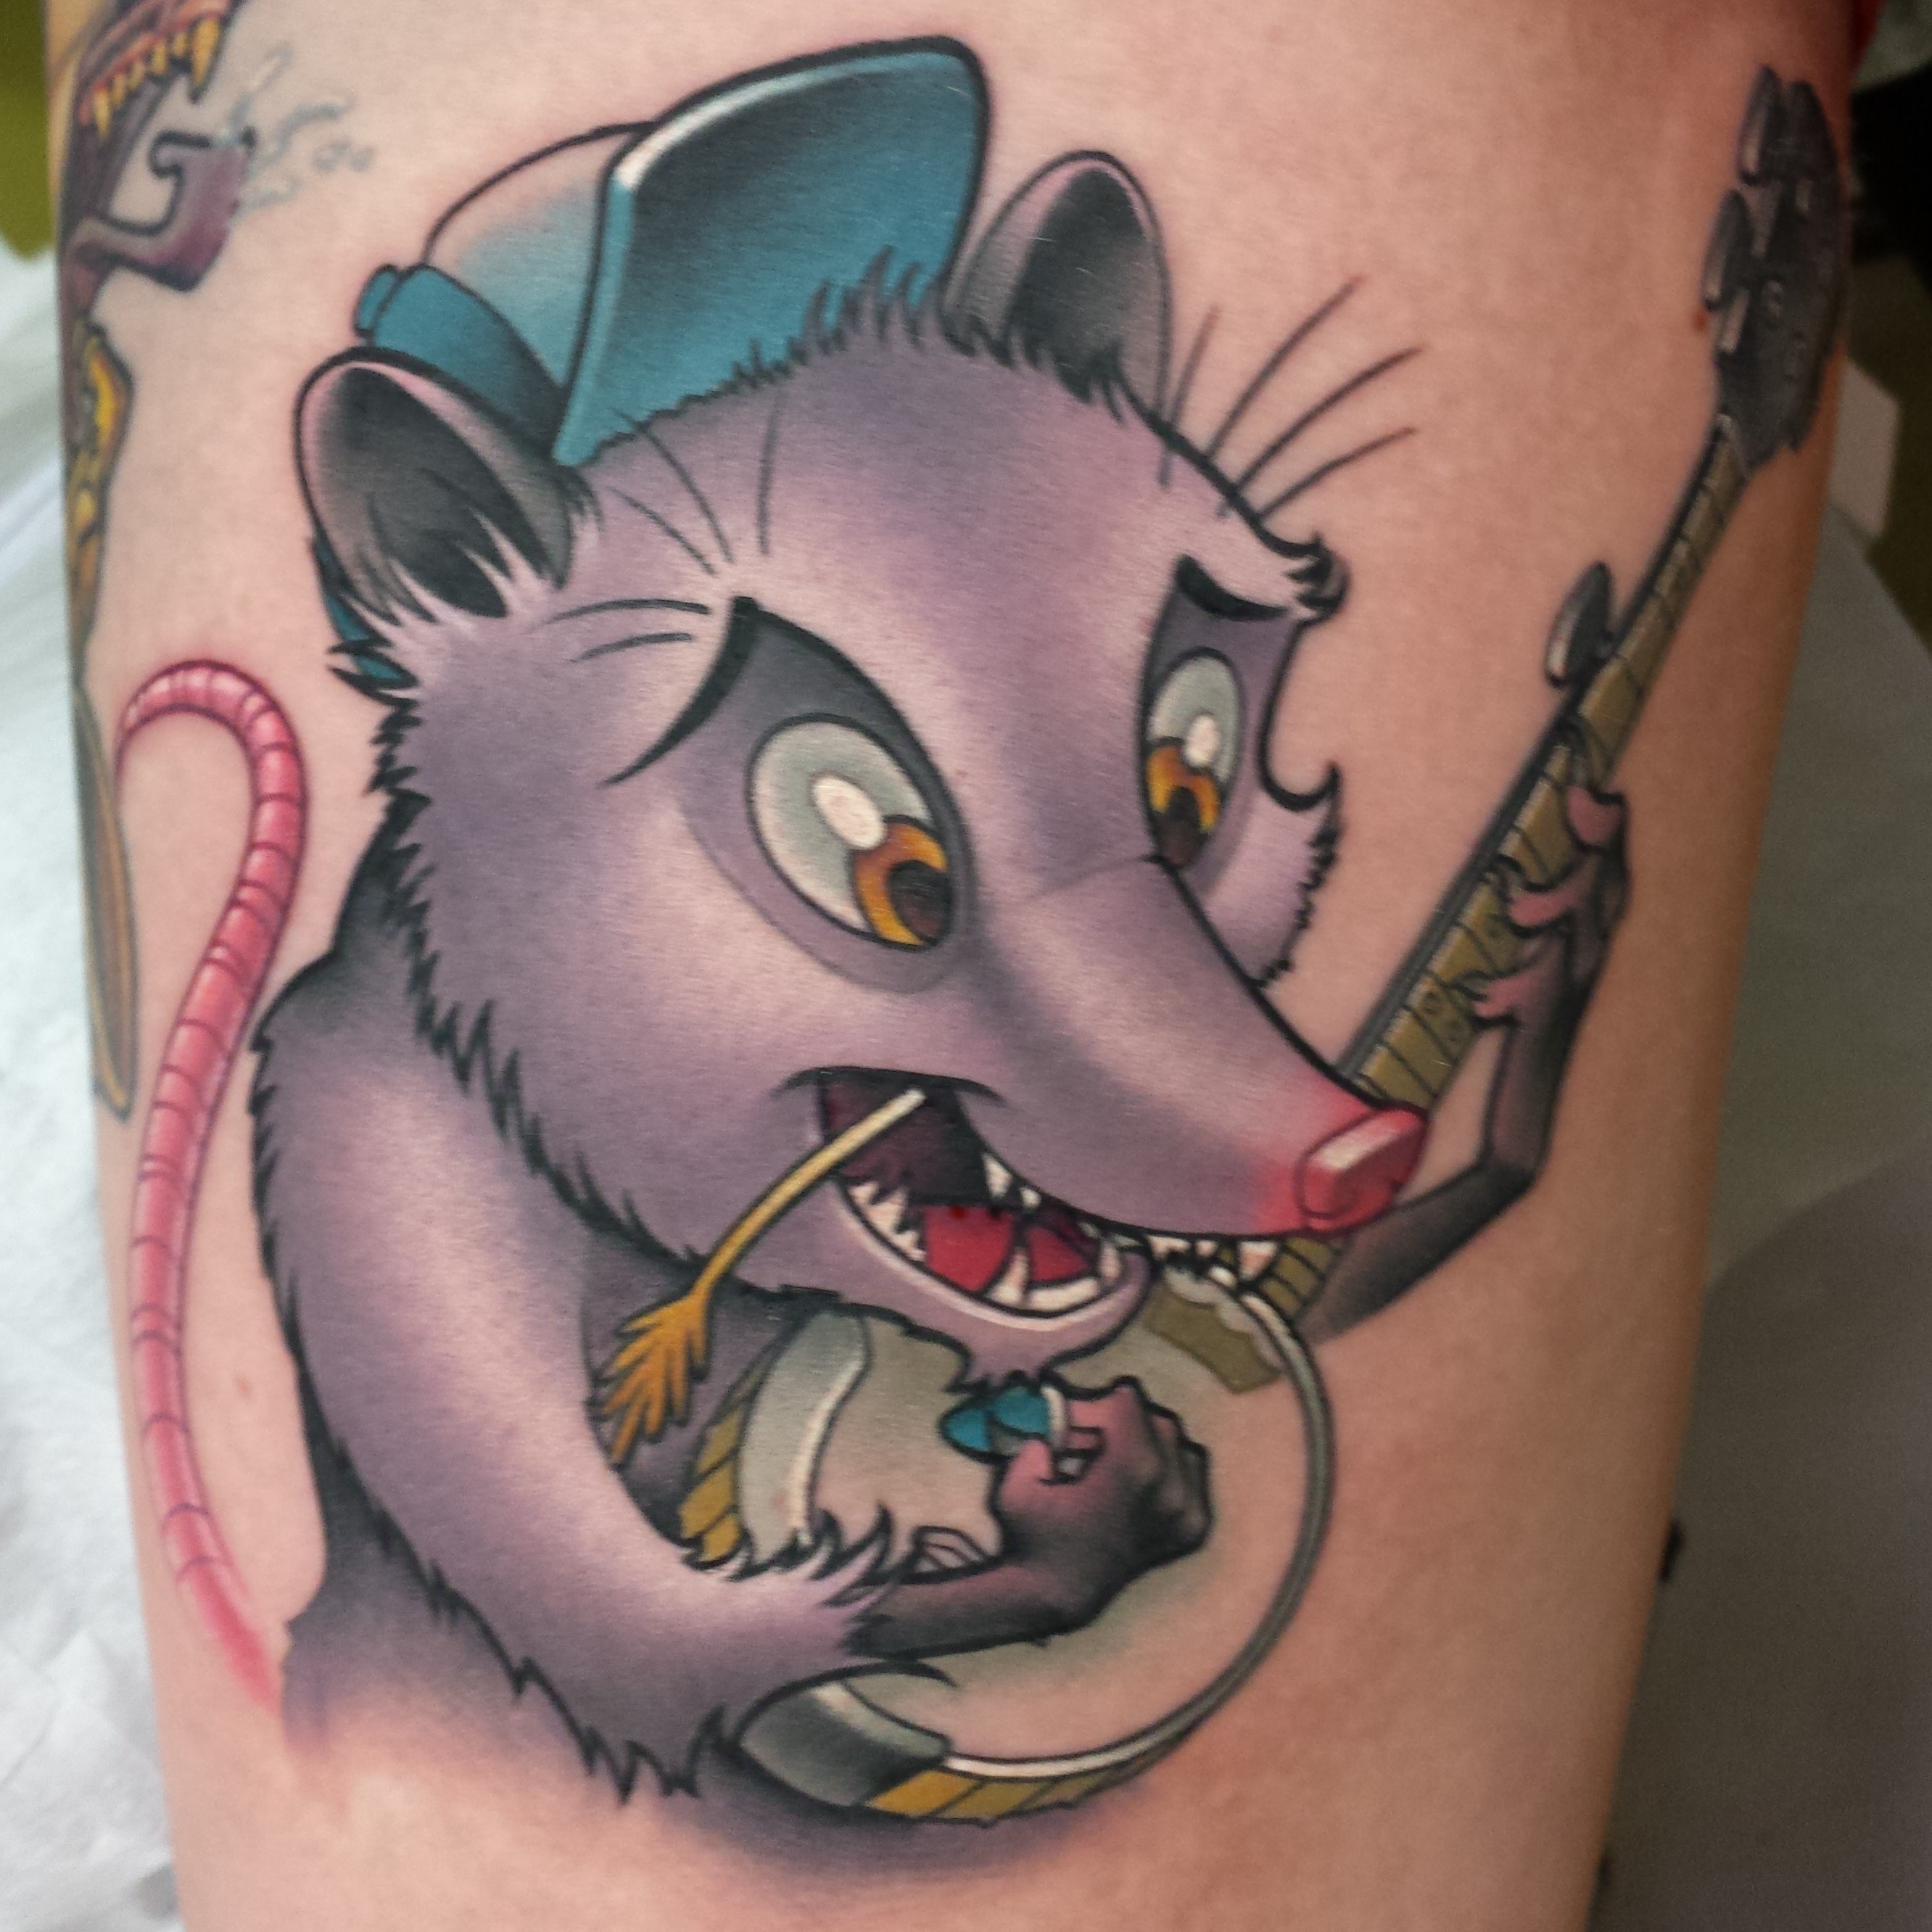 Hillbilly Opossum tattoo by Cracker Joe Swider from Connecticut